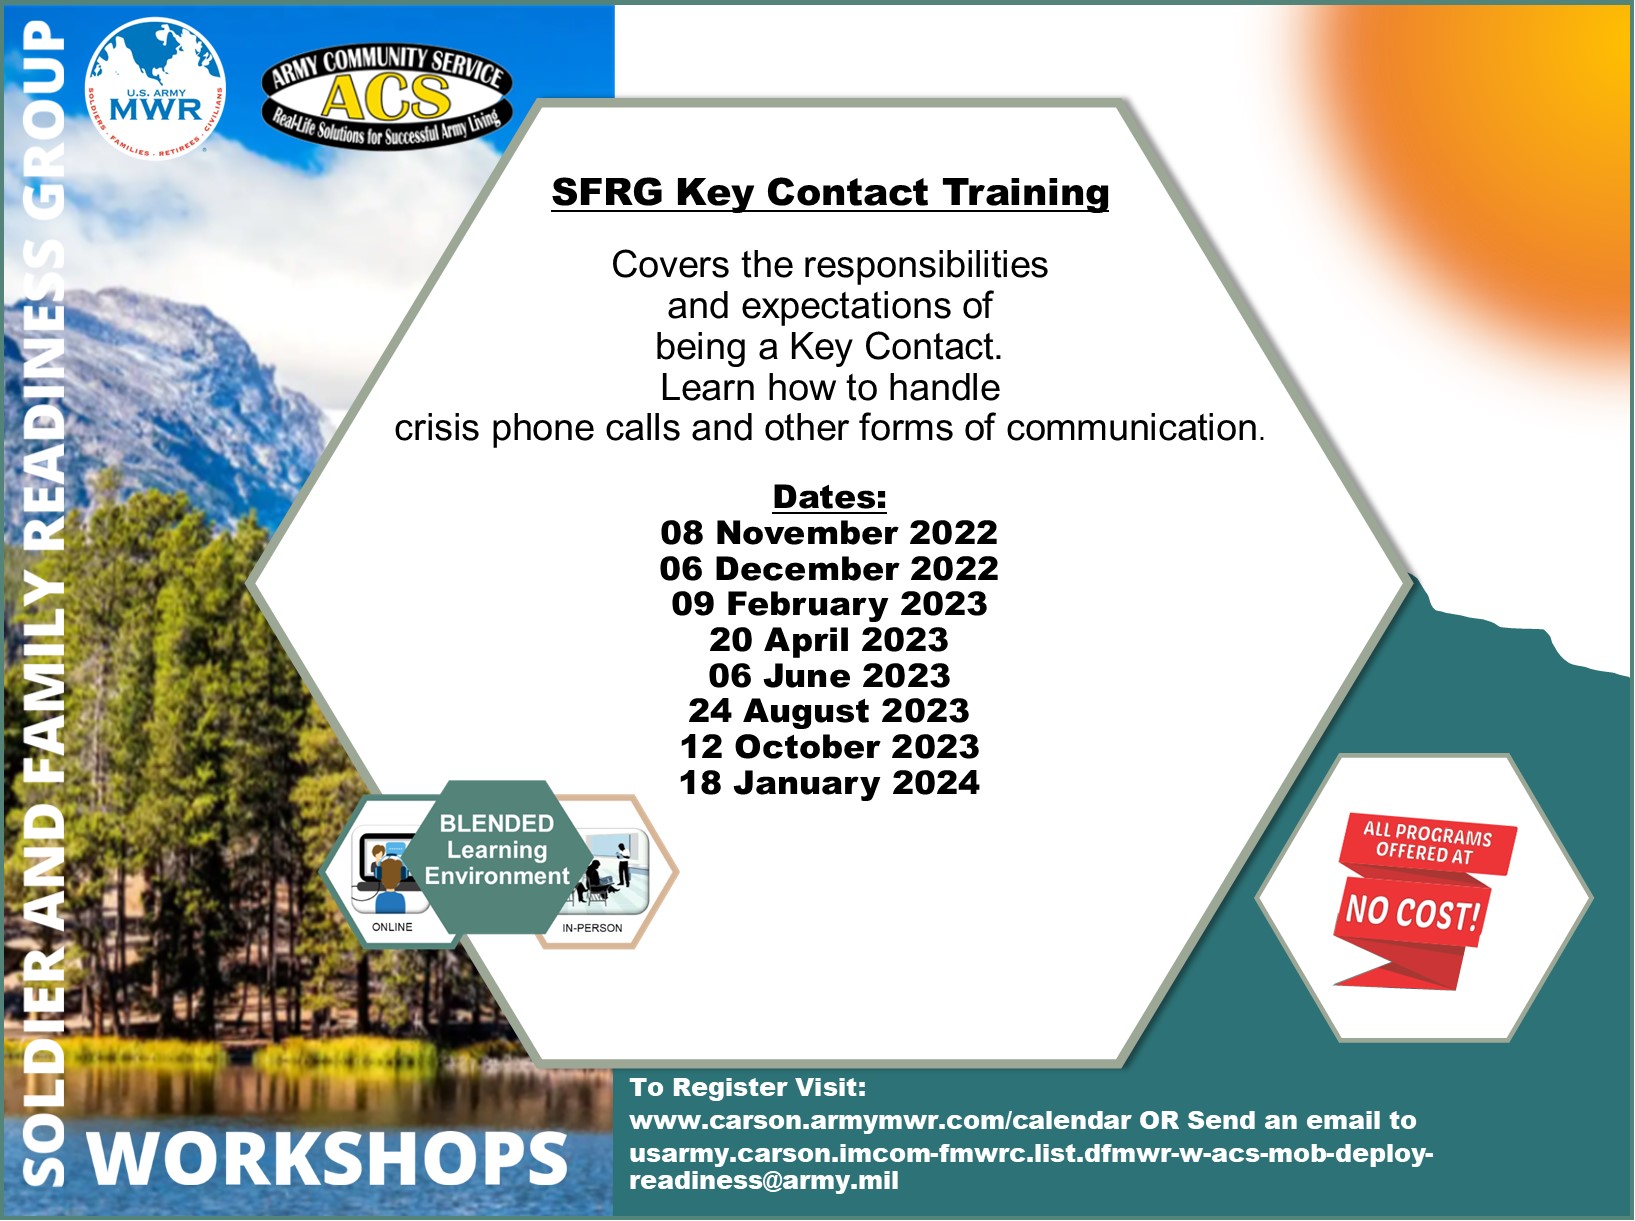 SFRG Key Contact Training